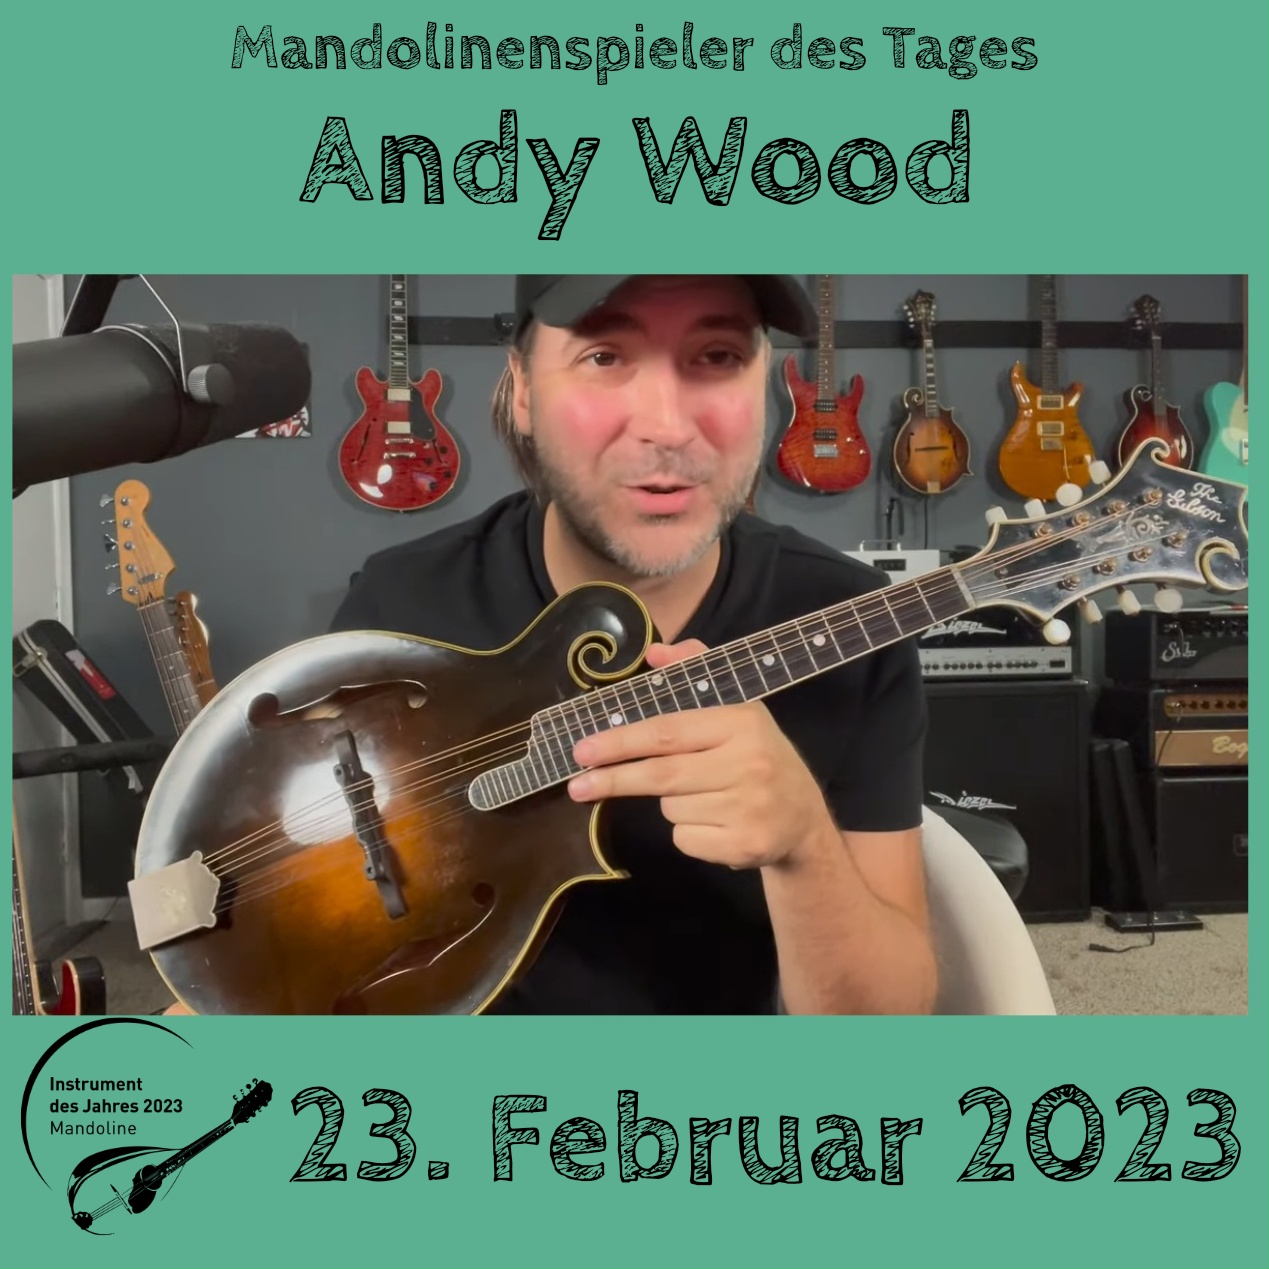 Andy Wood Mandoline Instrument des Jahres 2023 Mandolinenspieler des Tages